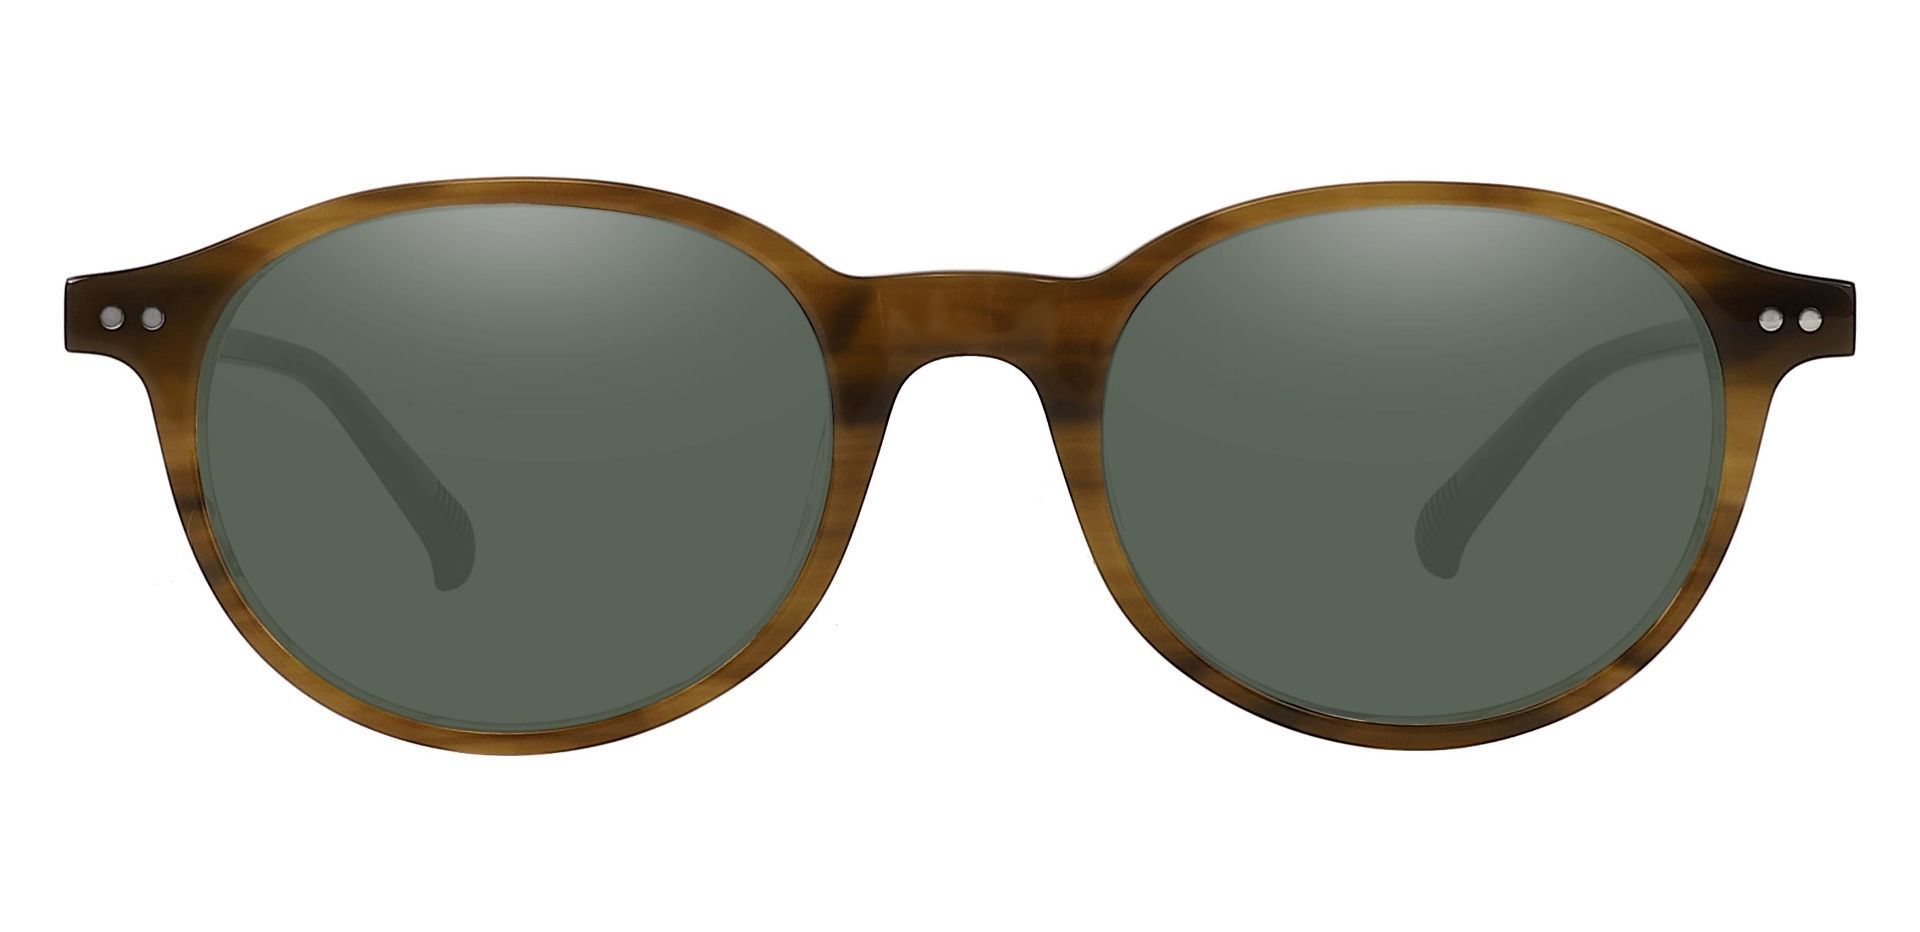 Avon Oval Progressive Sunglasses - Brown Frame With Green Lenses